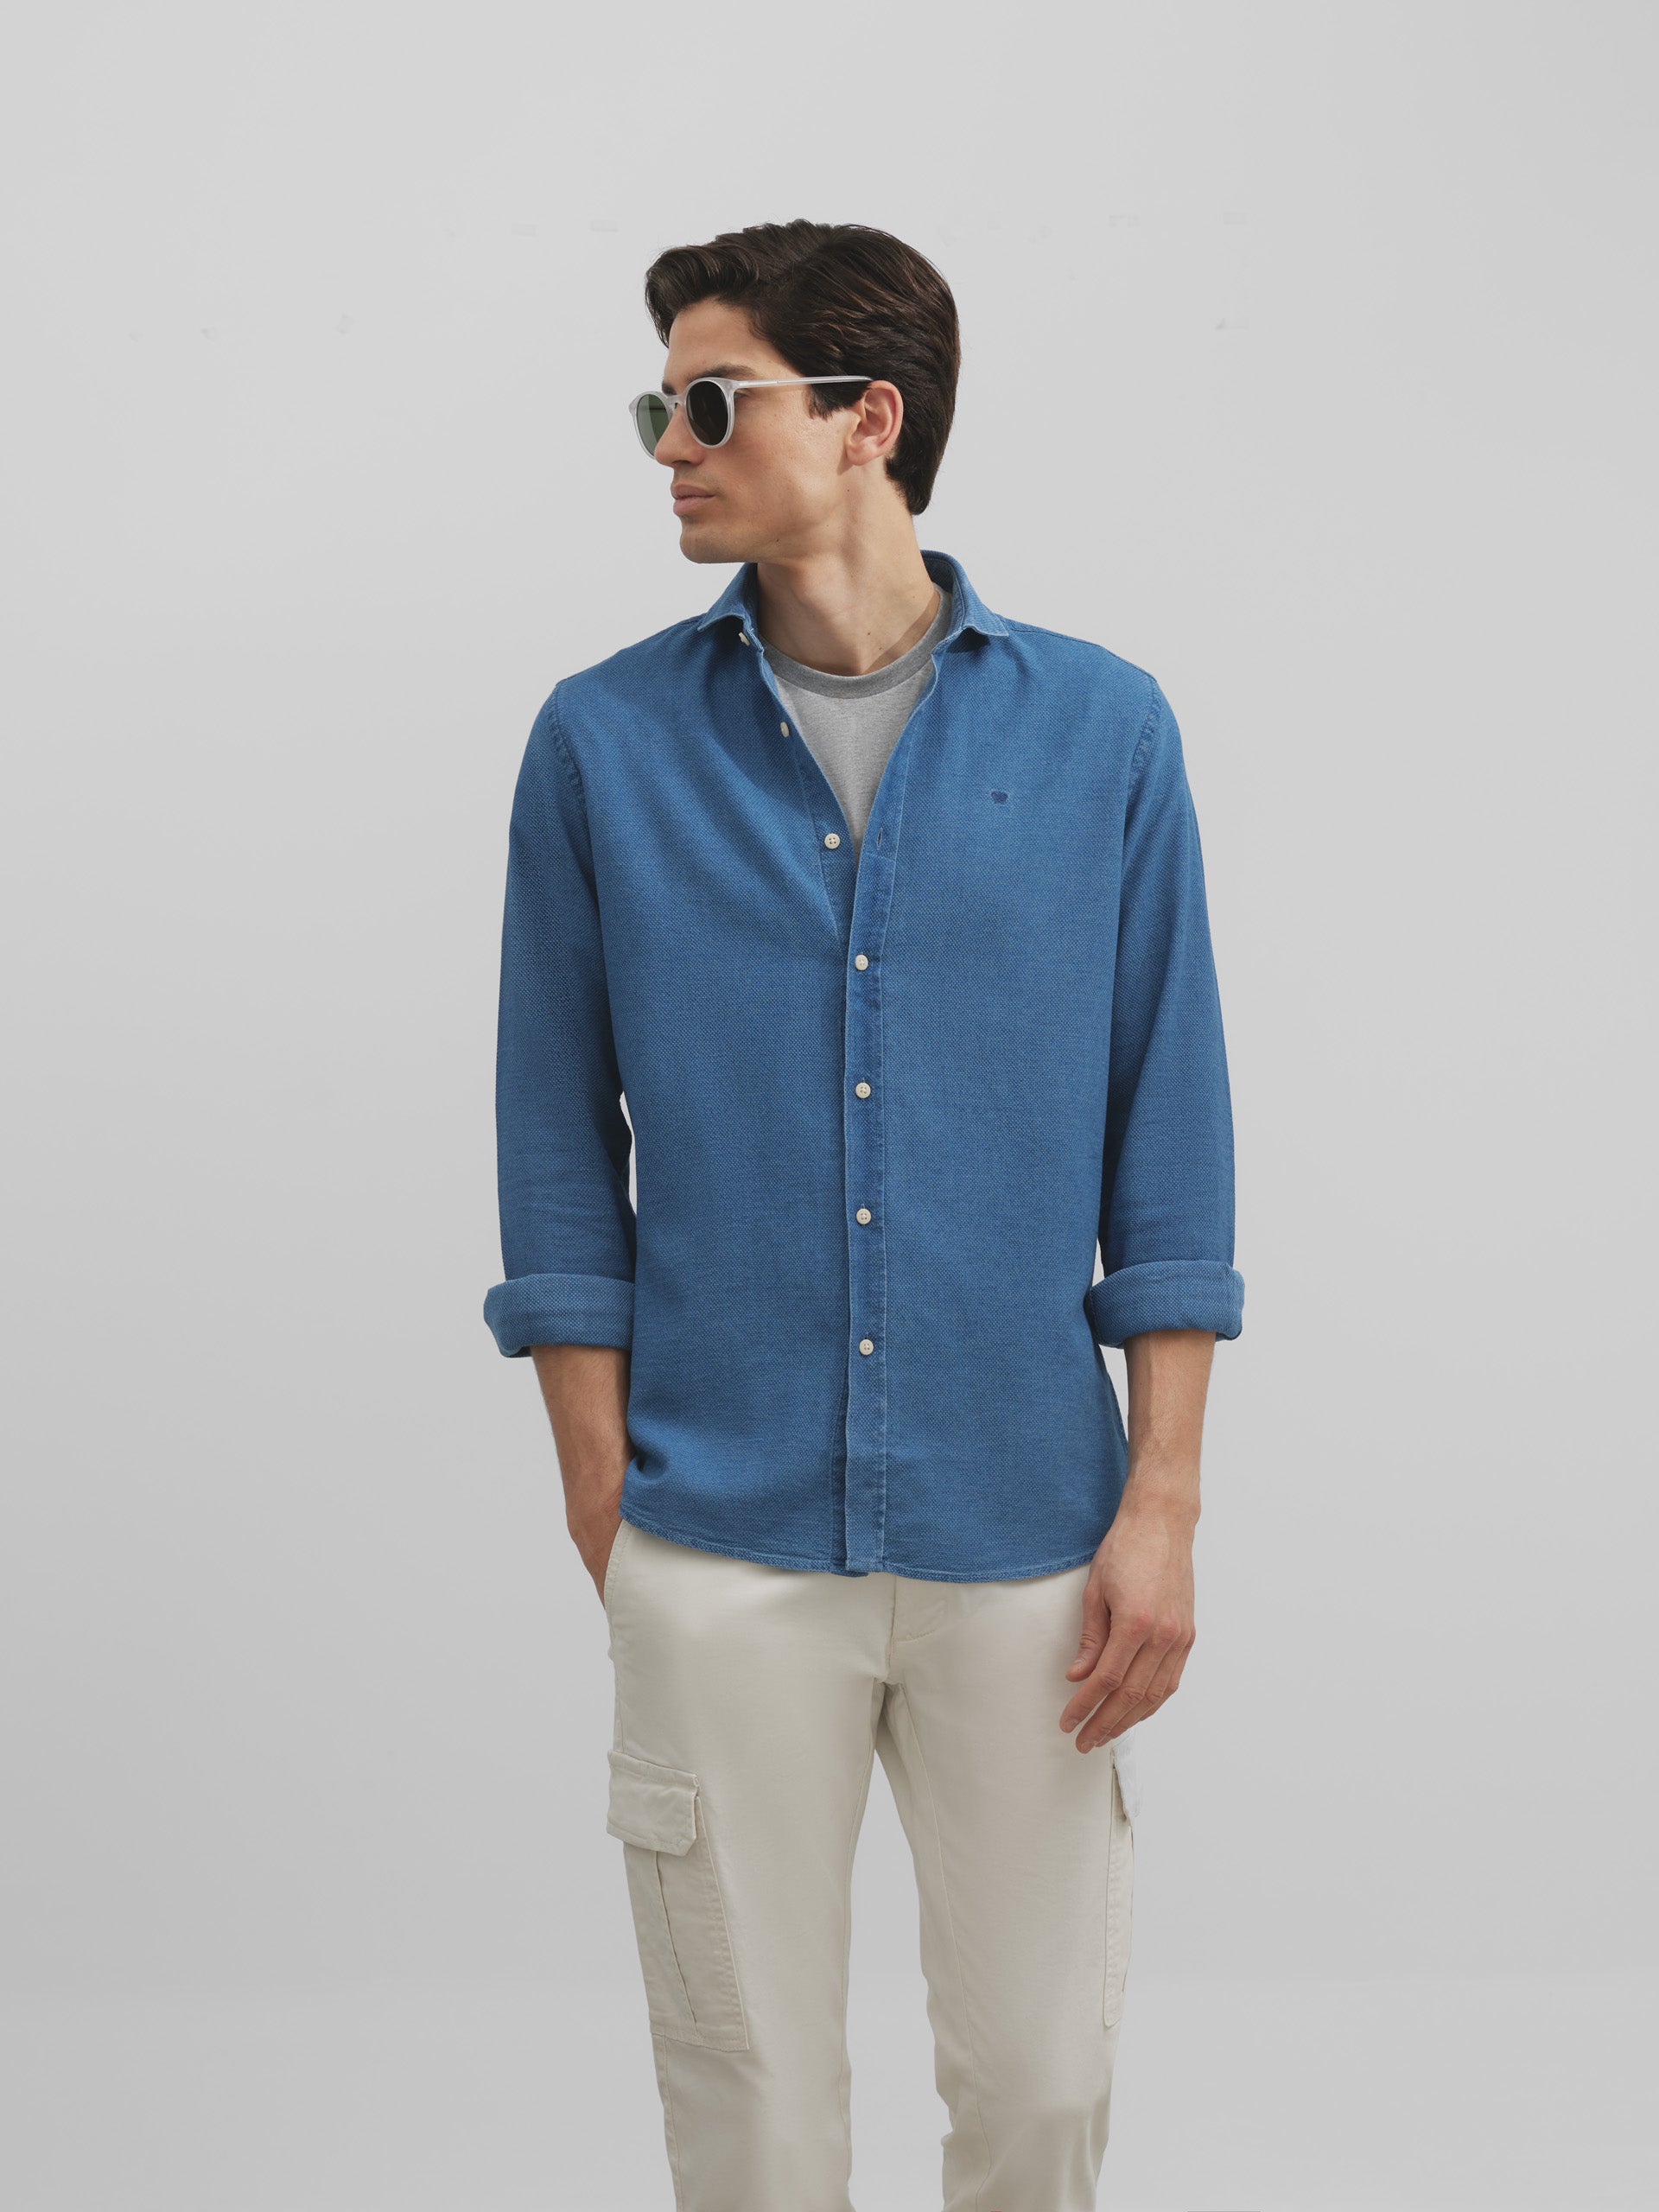 Medium blue denim structured sport shirt